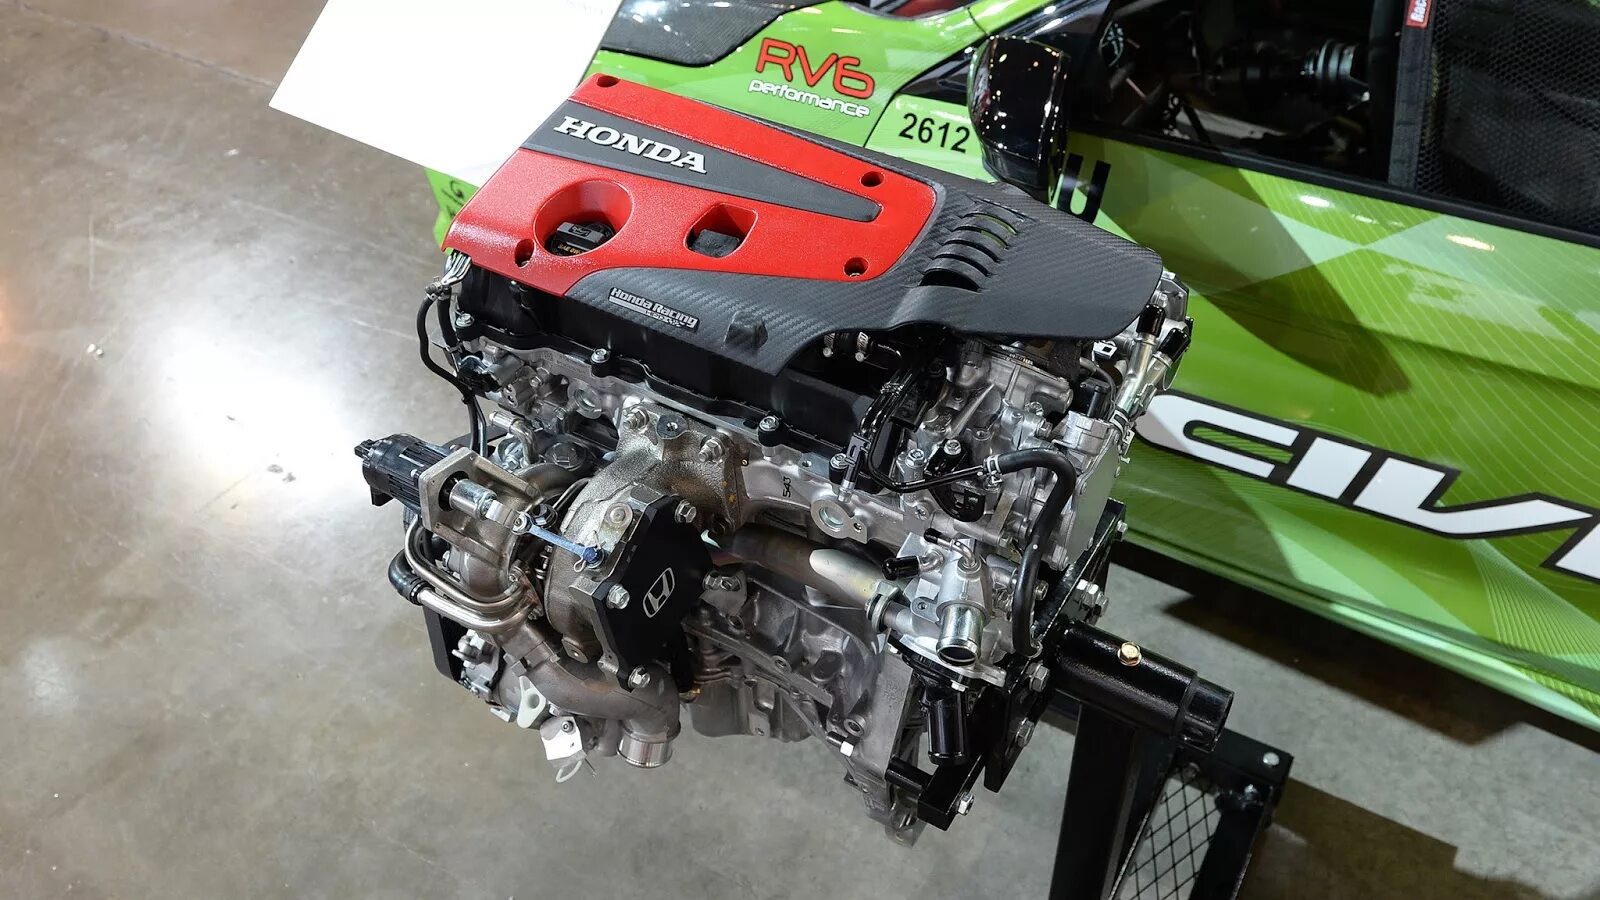 K 20 41 m. Мотор Хонда k 20 c. Двигатель Honda c20a. F20c s1 двигатель. Honda k20 c1 Tuning.